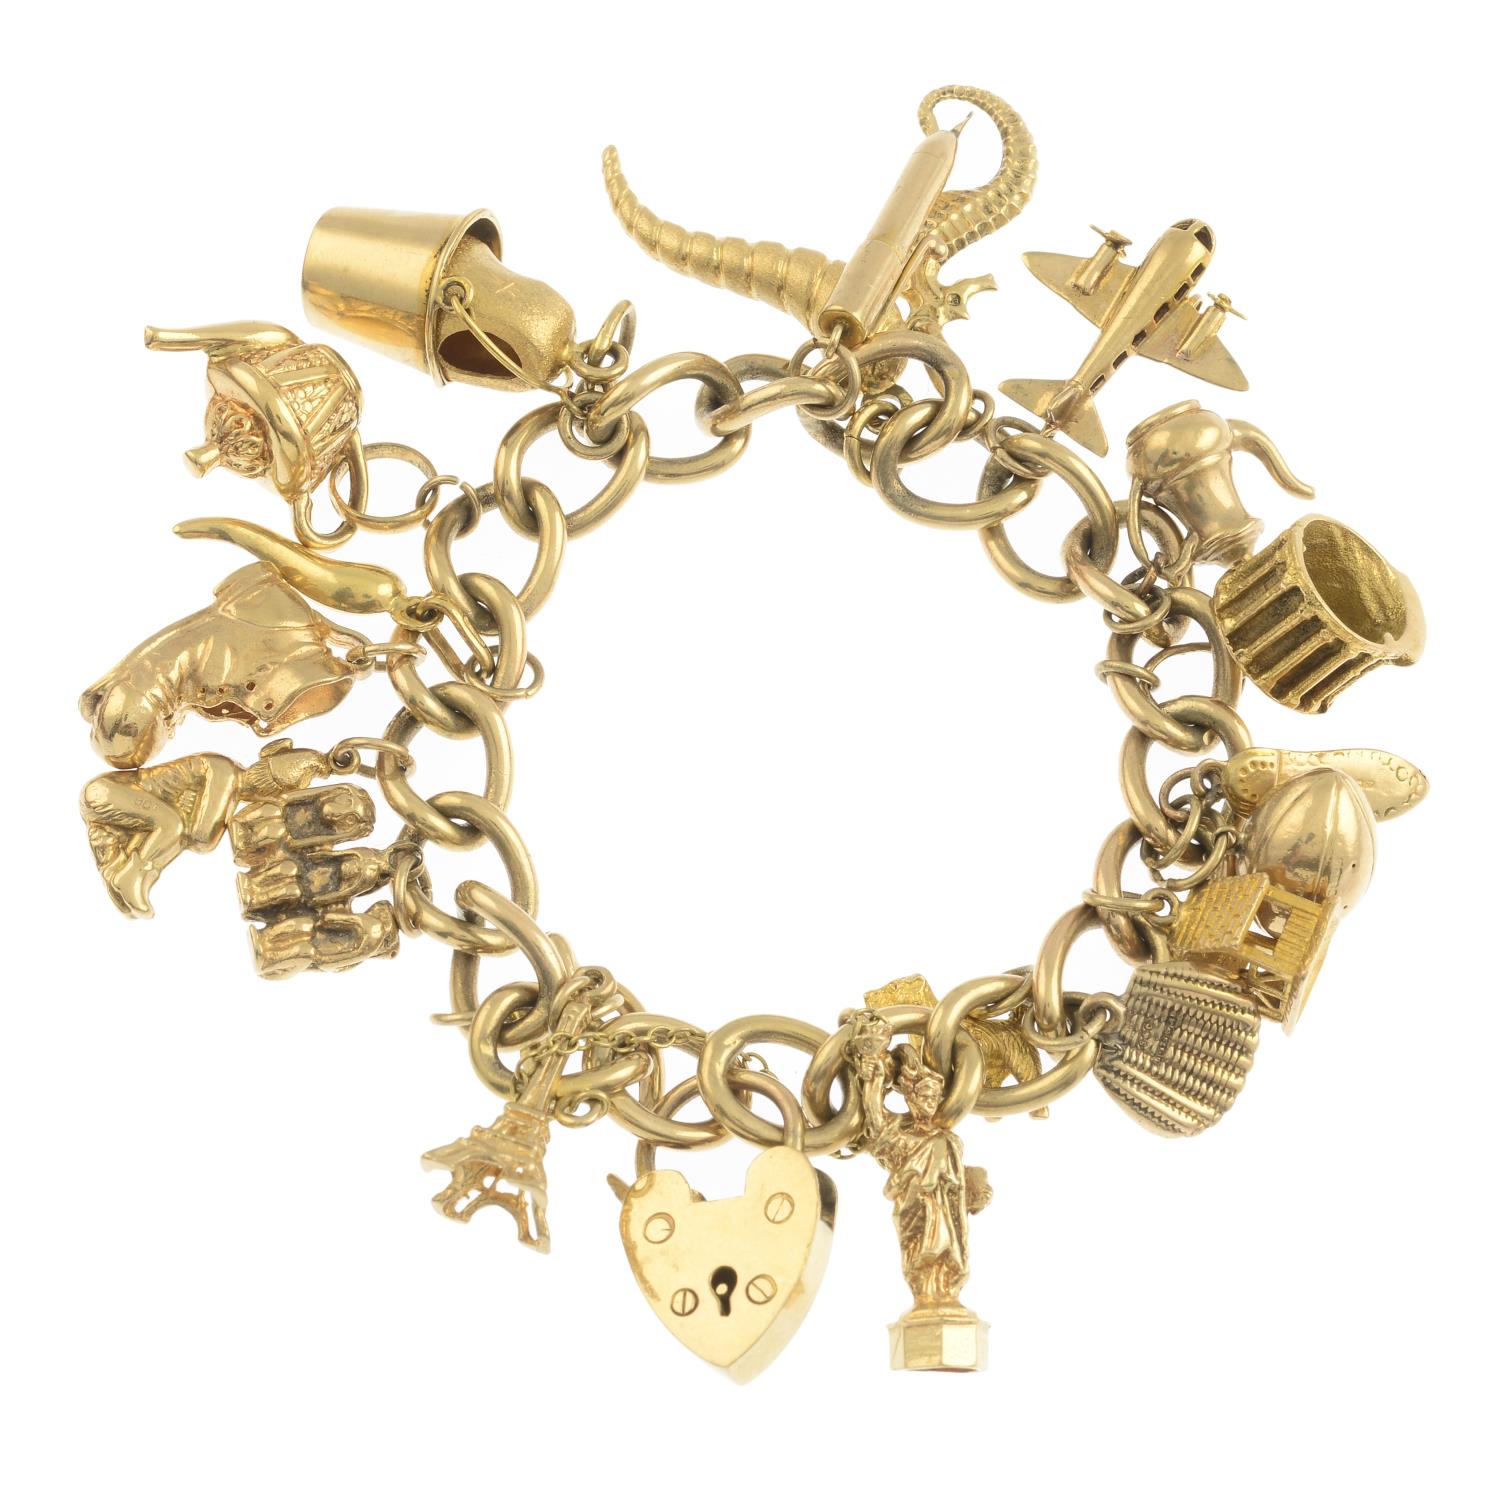 (54788) A 1970s 9ct gold charm bracelet,